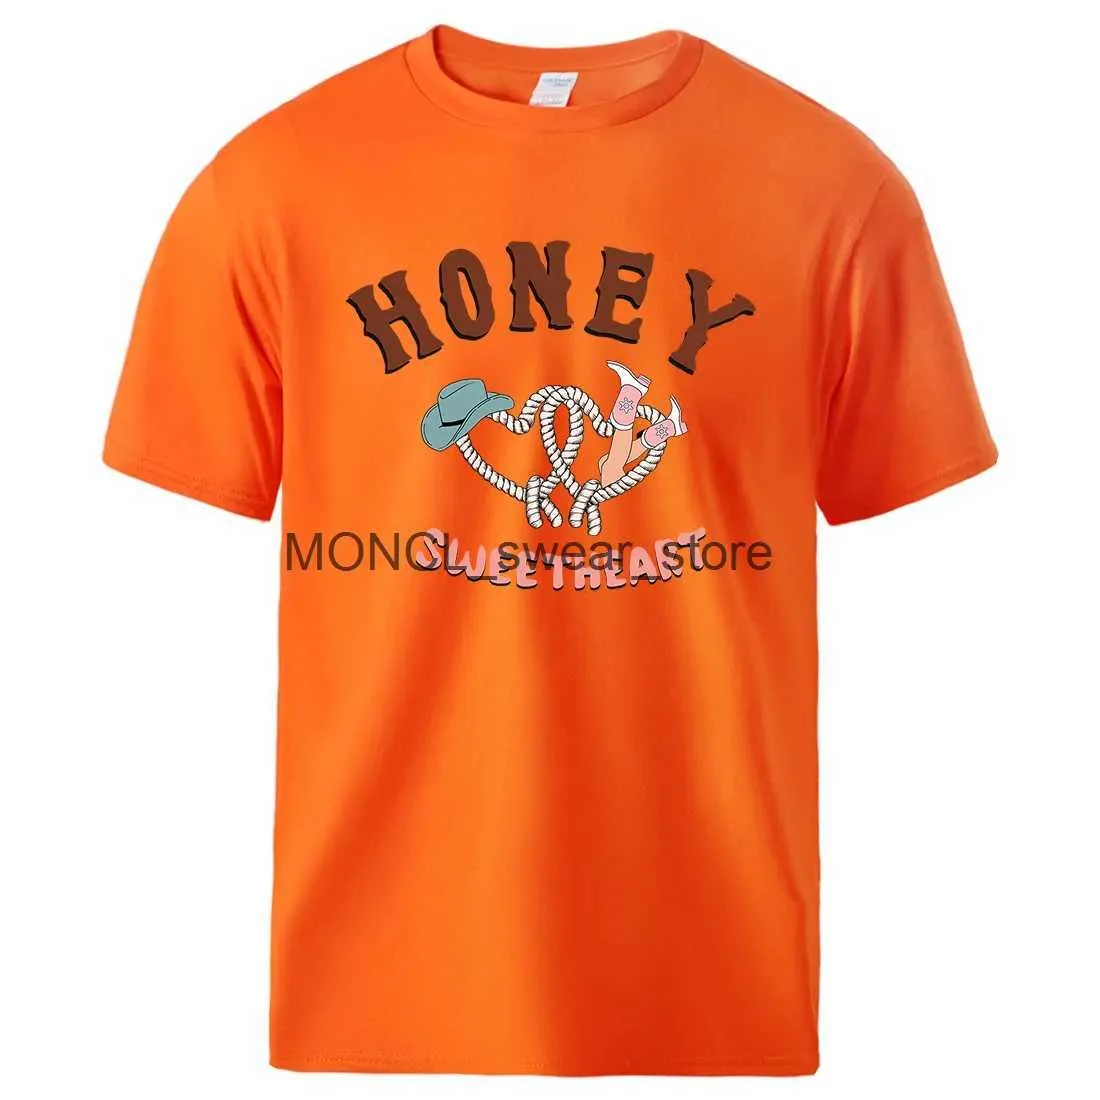 T-shirts pour hommes Honey Sweetheart Western Cowgirl Impression T-shirts surdimensionnés T-shirt à col rond Casual Tops respirants et confortables T-shirtH24129